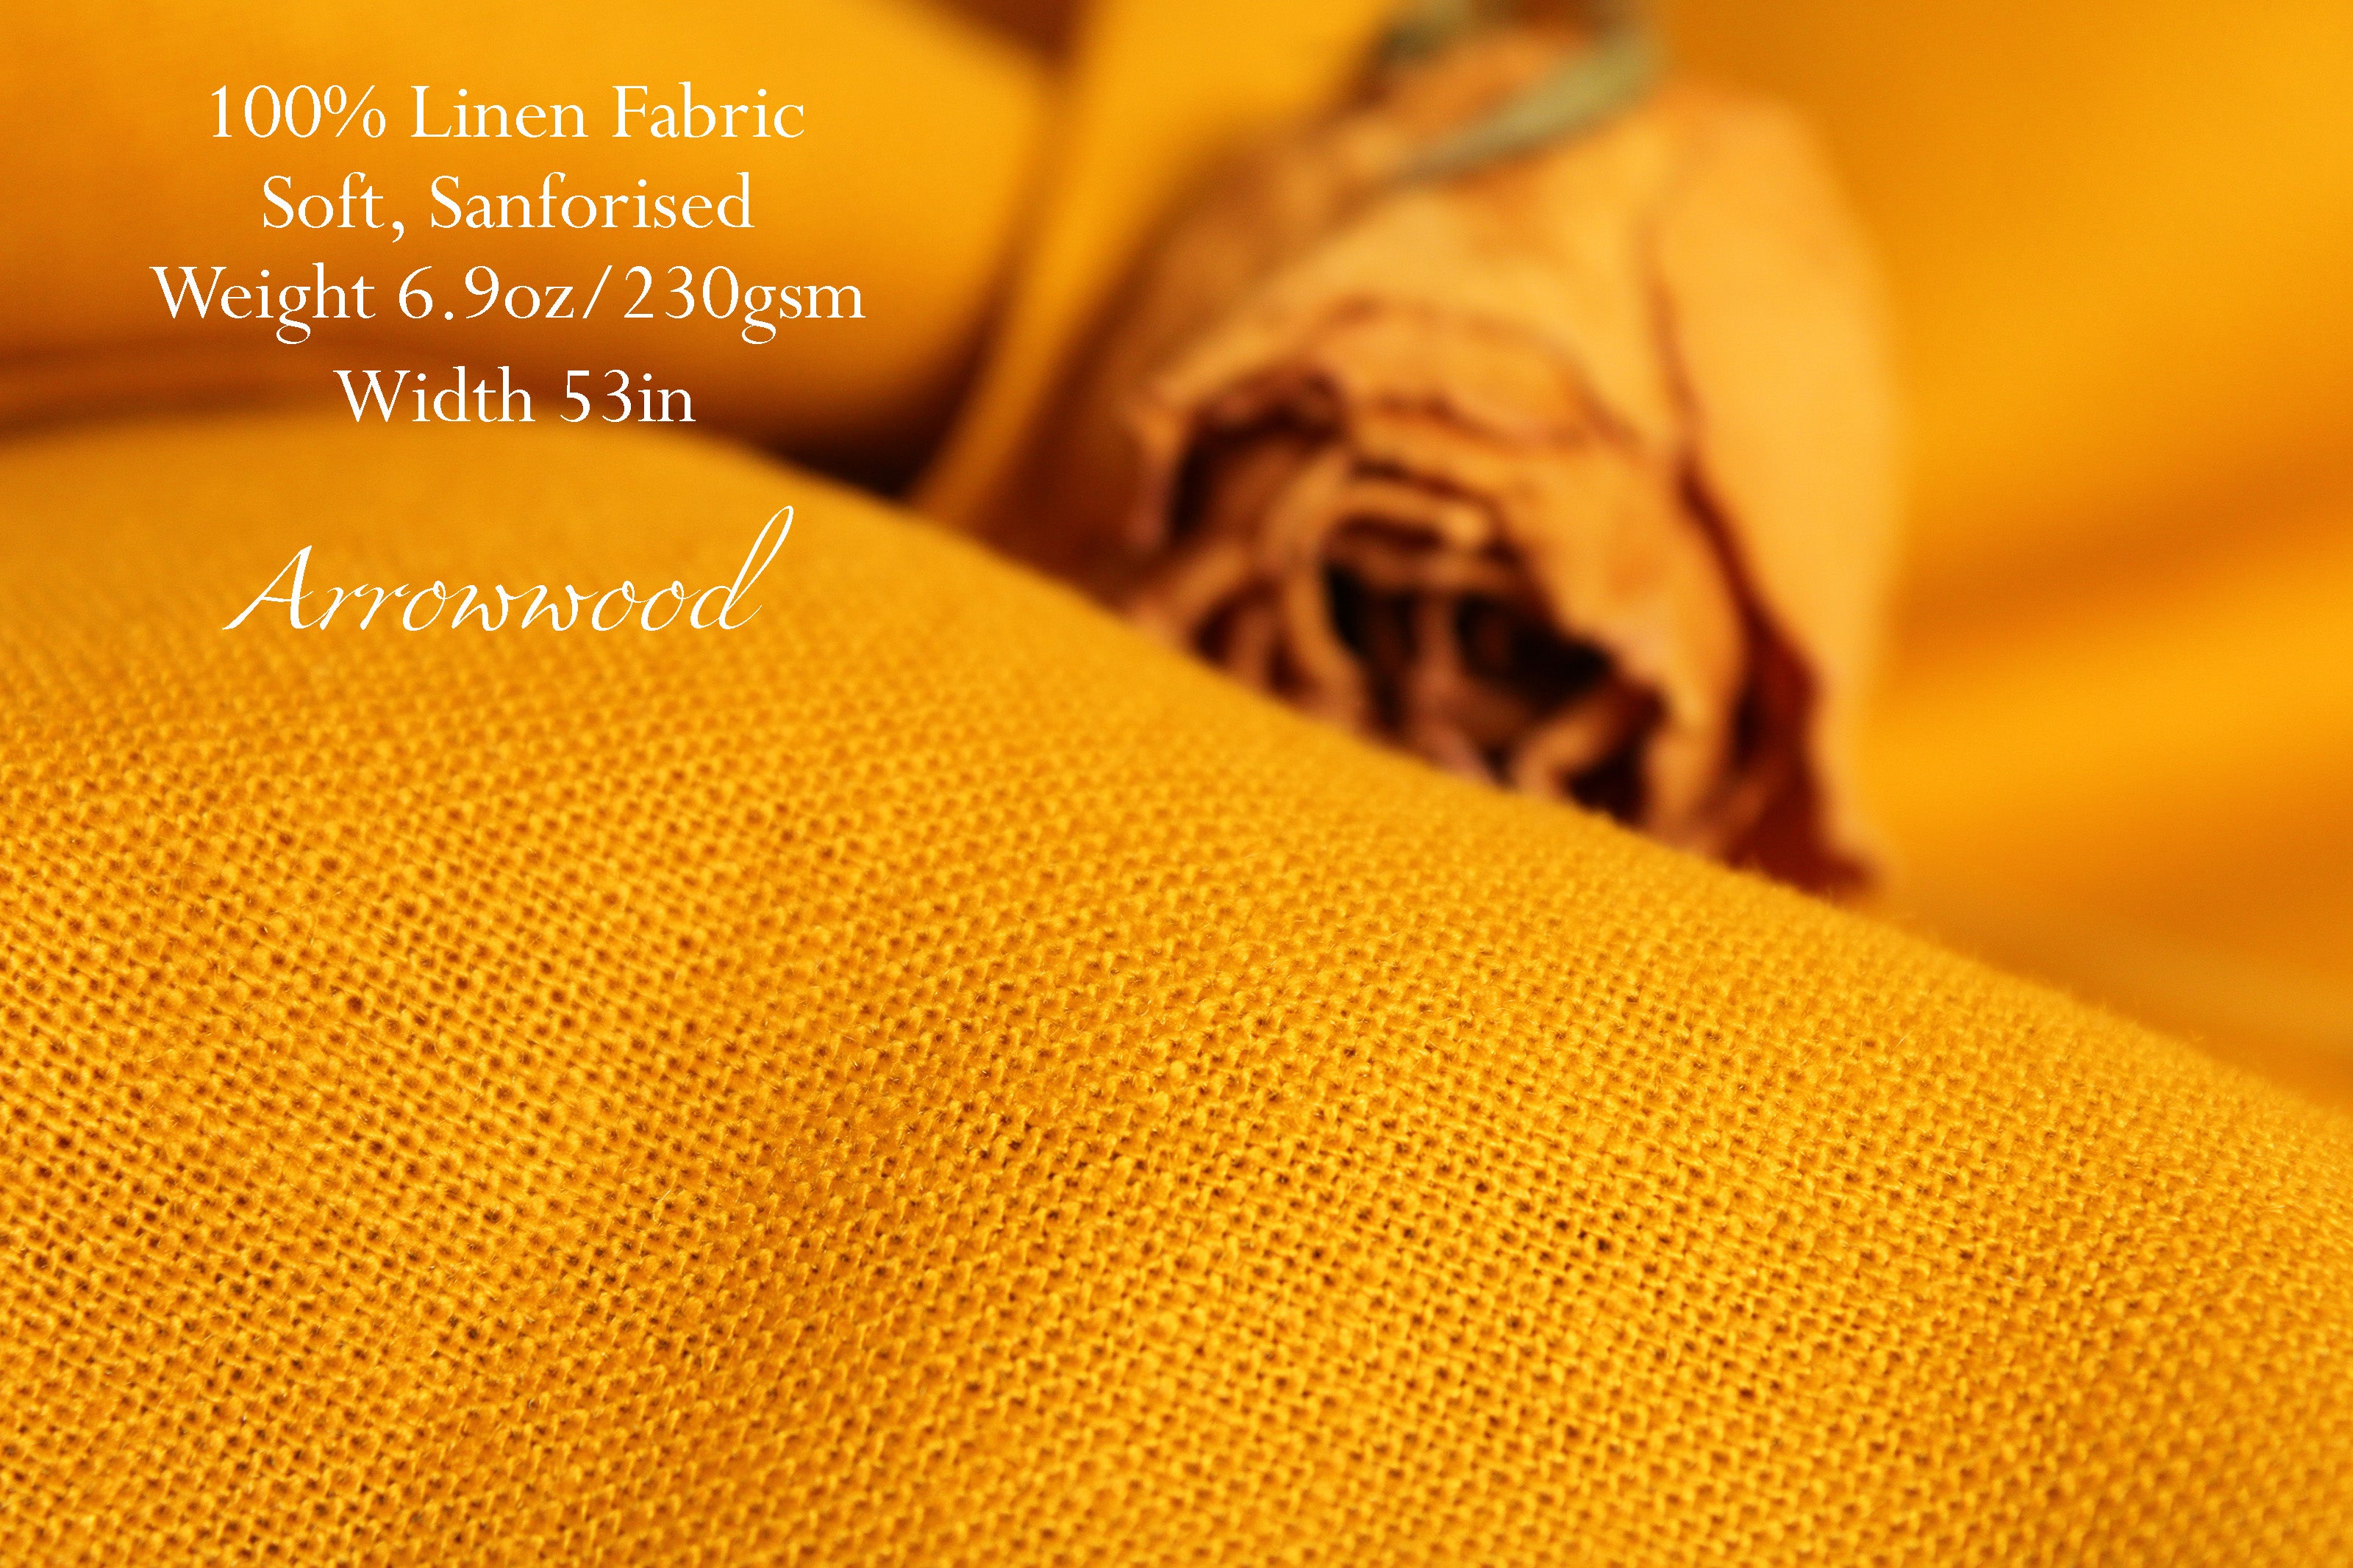 NEW LINEN FABRIC COLLECTION!!! / 100% Linen Fabric by the Yard / Arrowwood Linen Fabric / Buy Linen Online